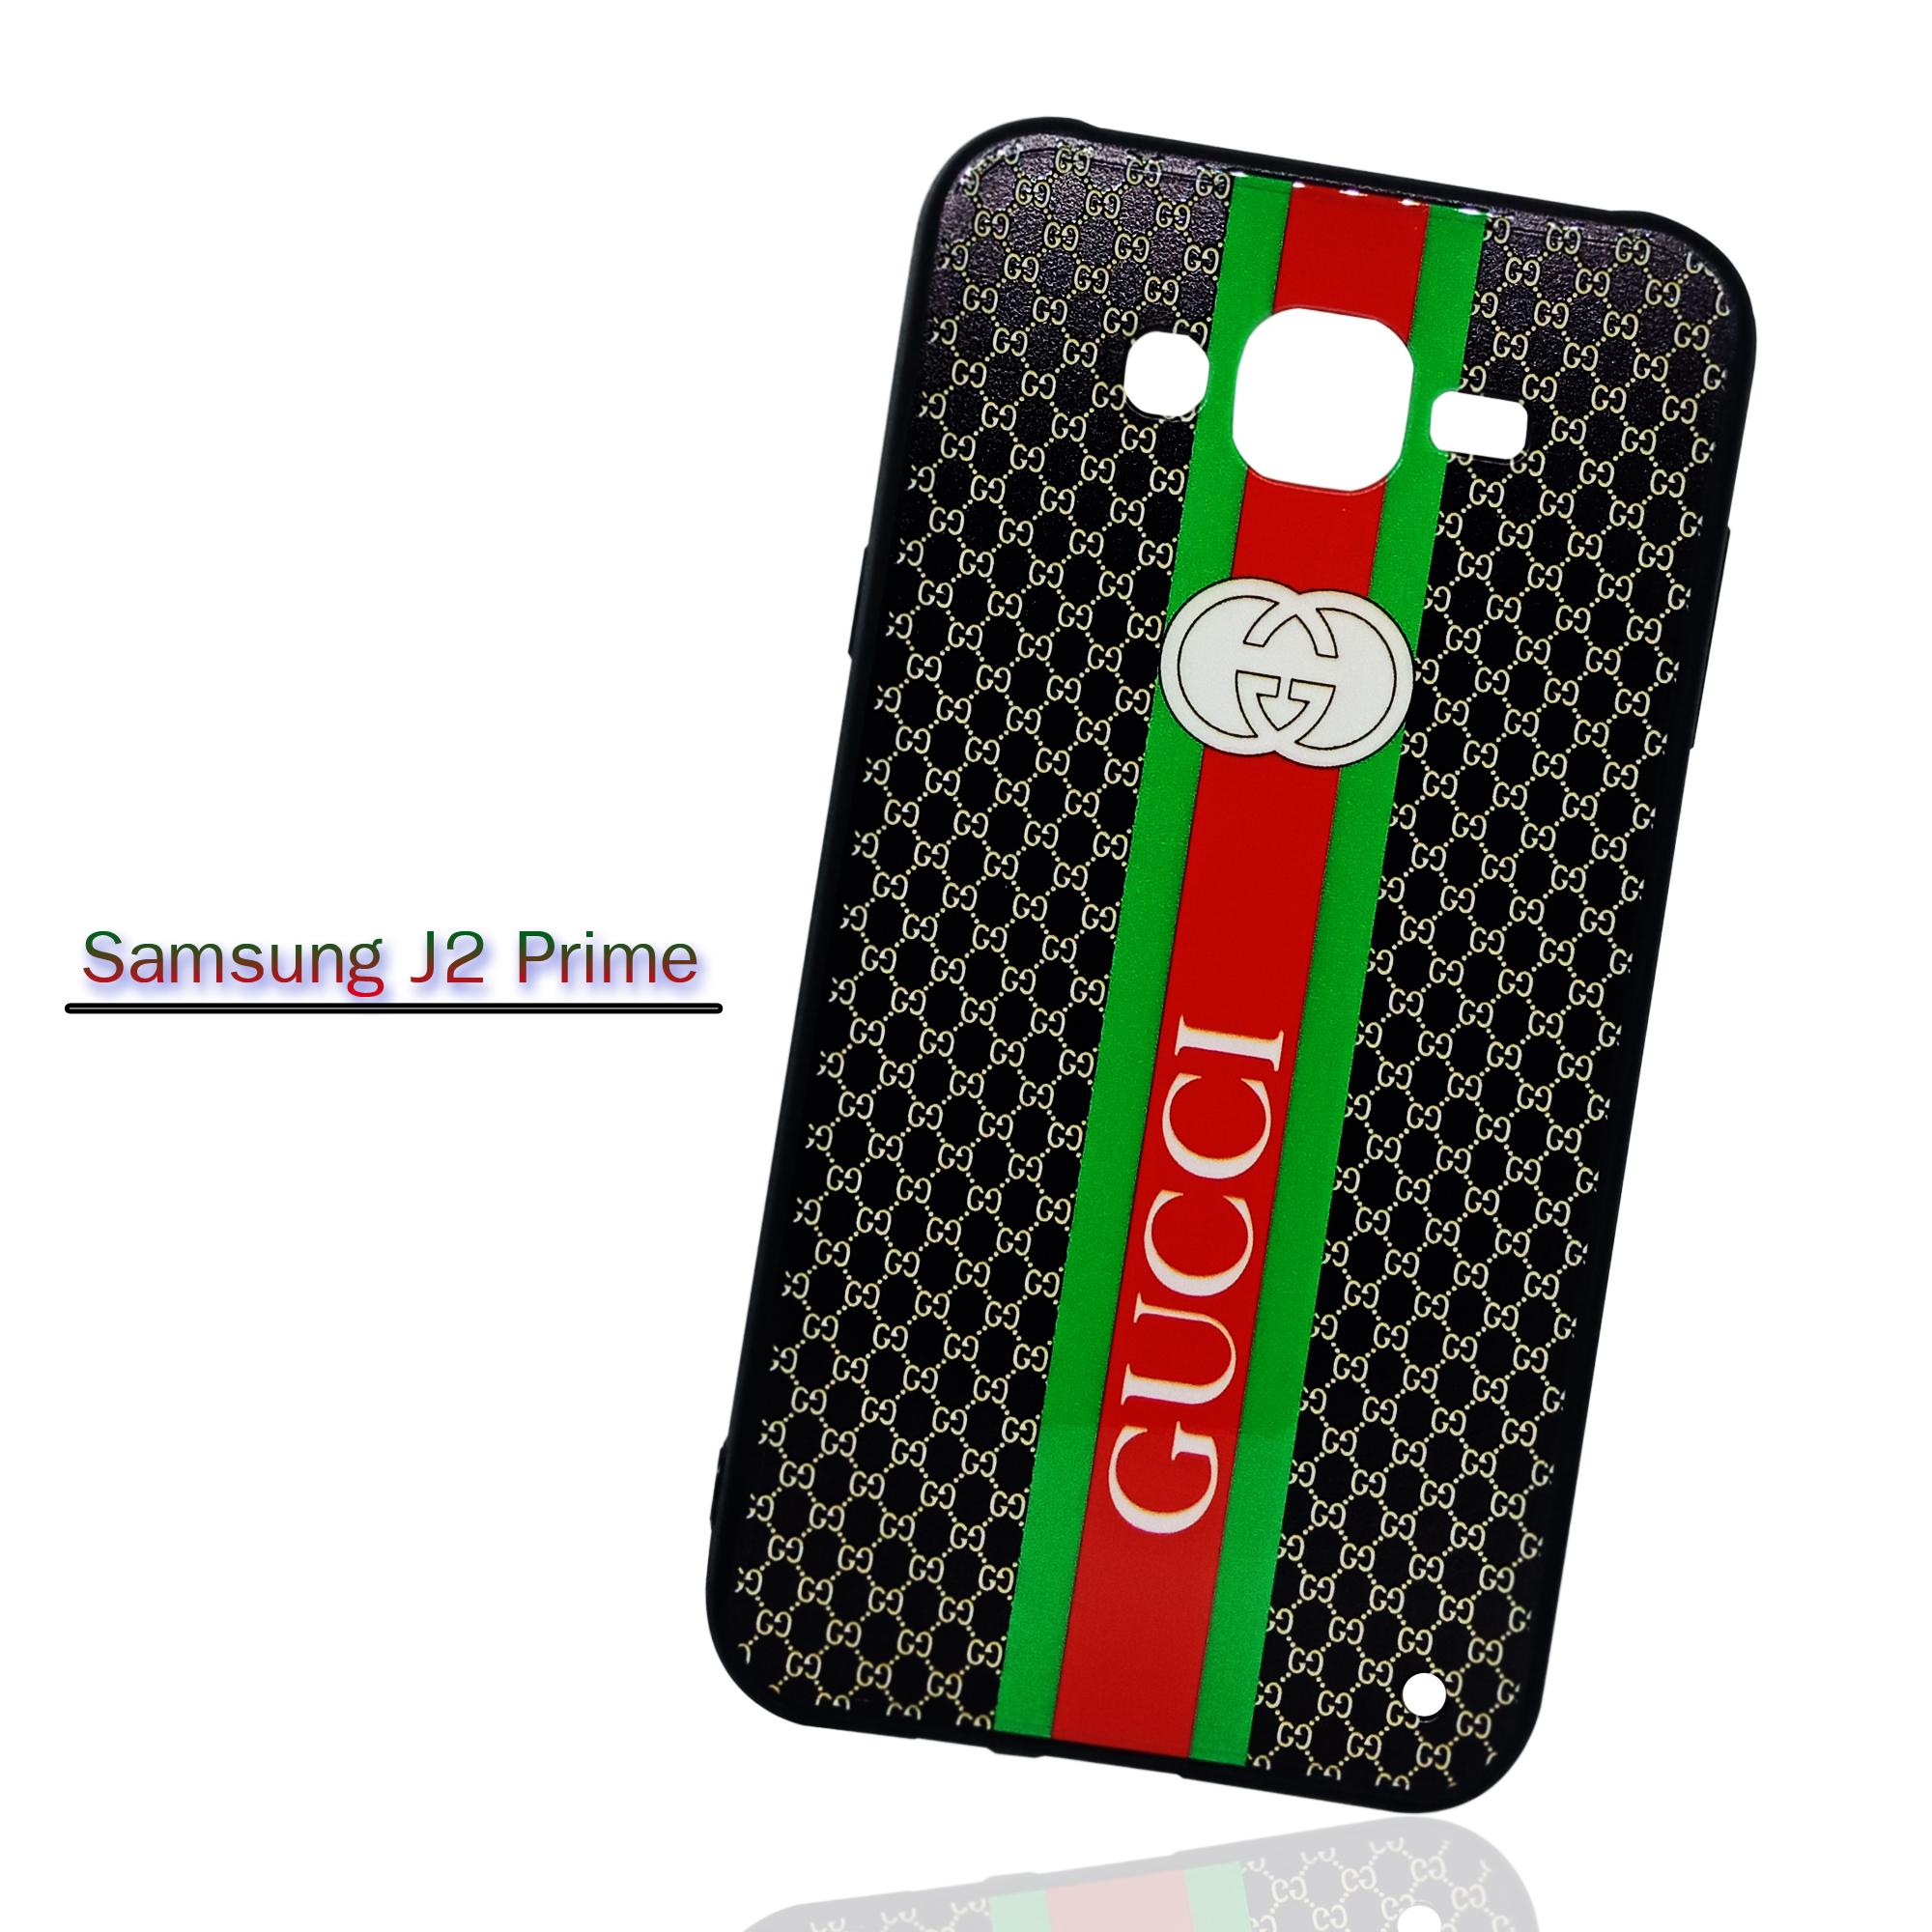 Softcase Fashion Phone Case New Samsung Galaxy J2 Prime